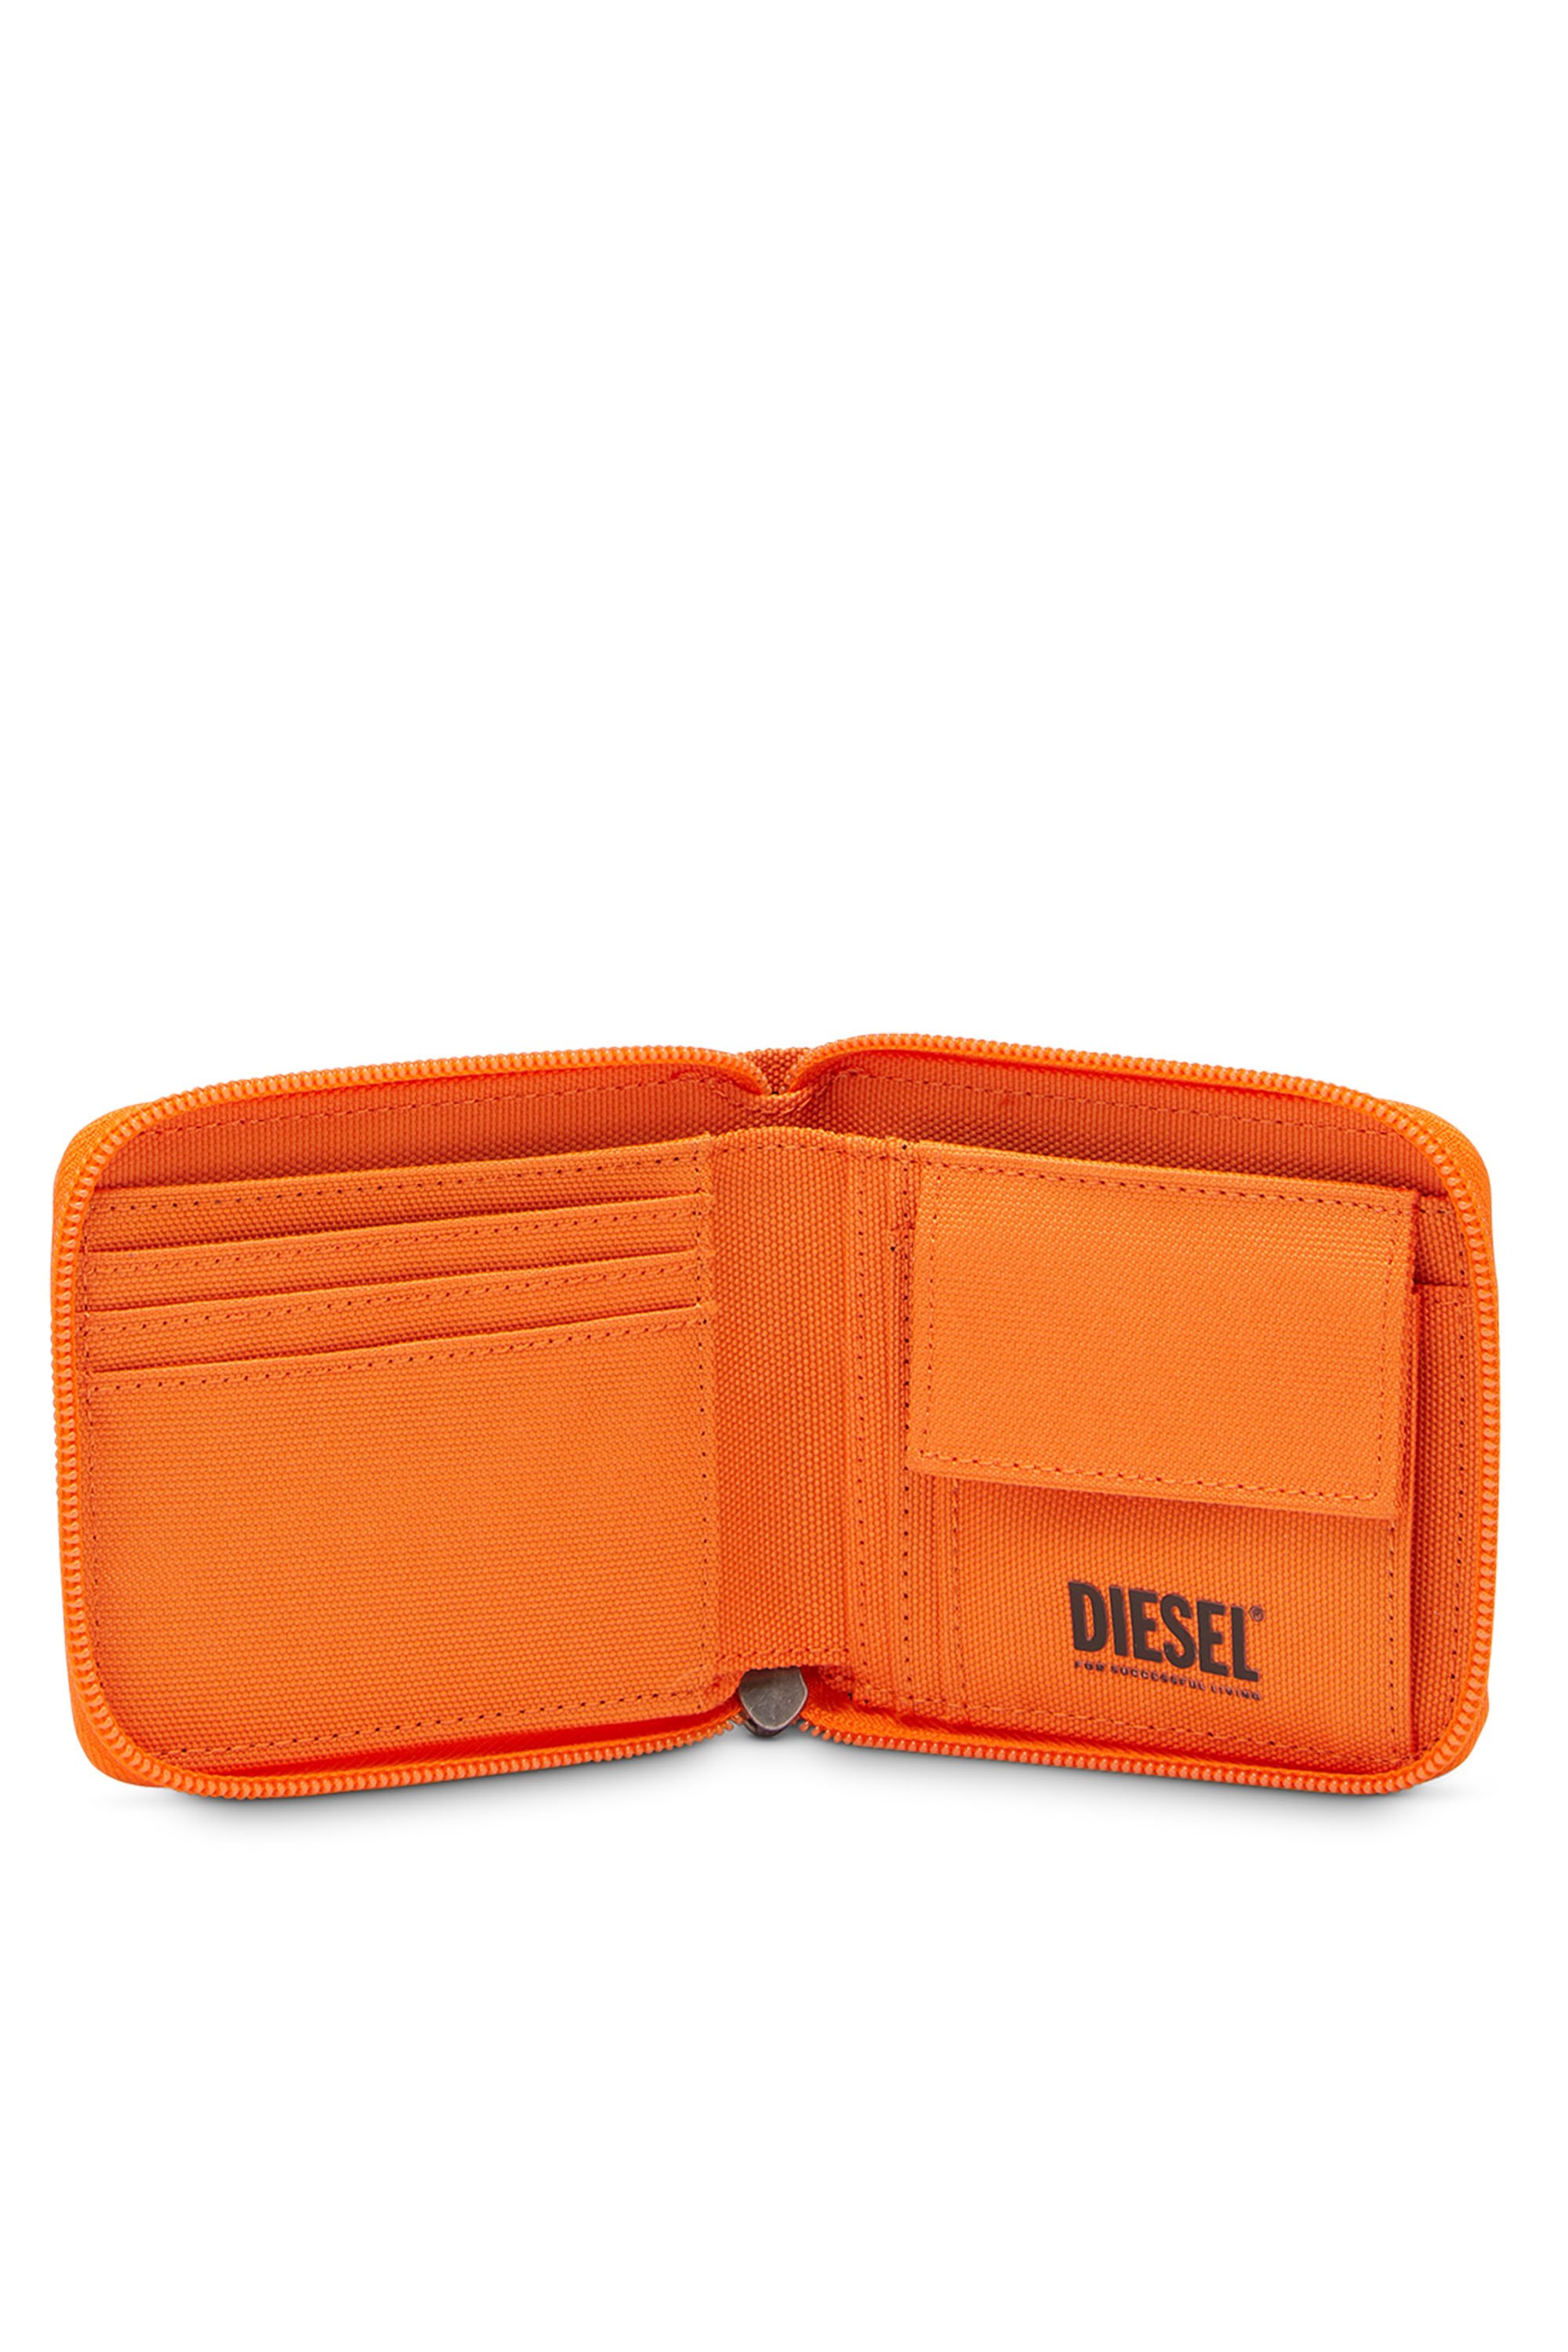 Diesel - HIRESH XS ZIPPI, オレンジ - Image 3